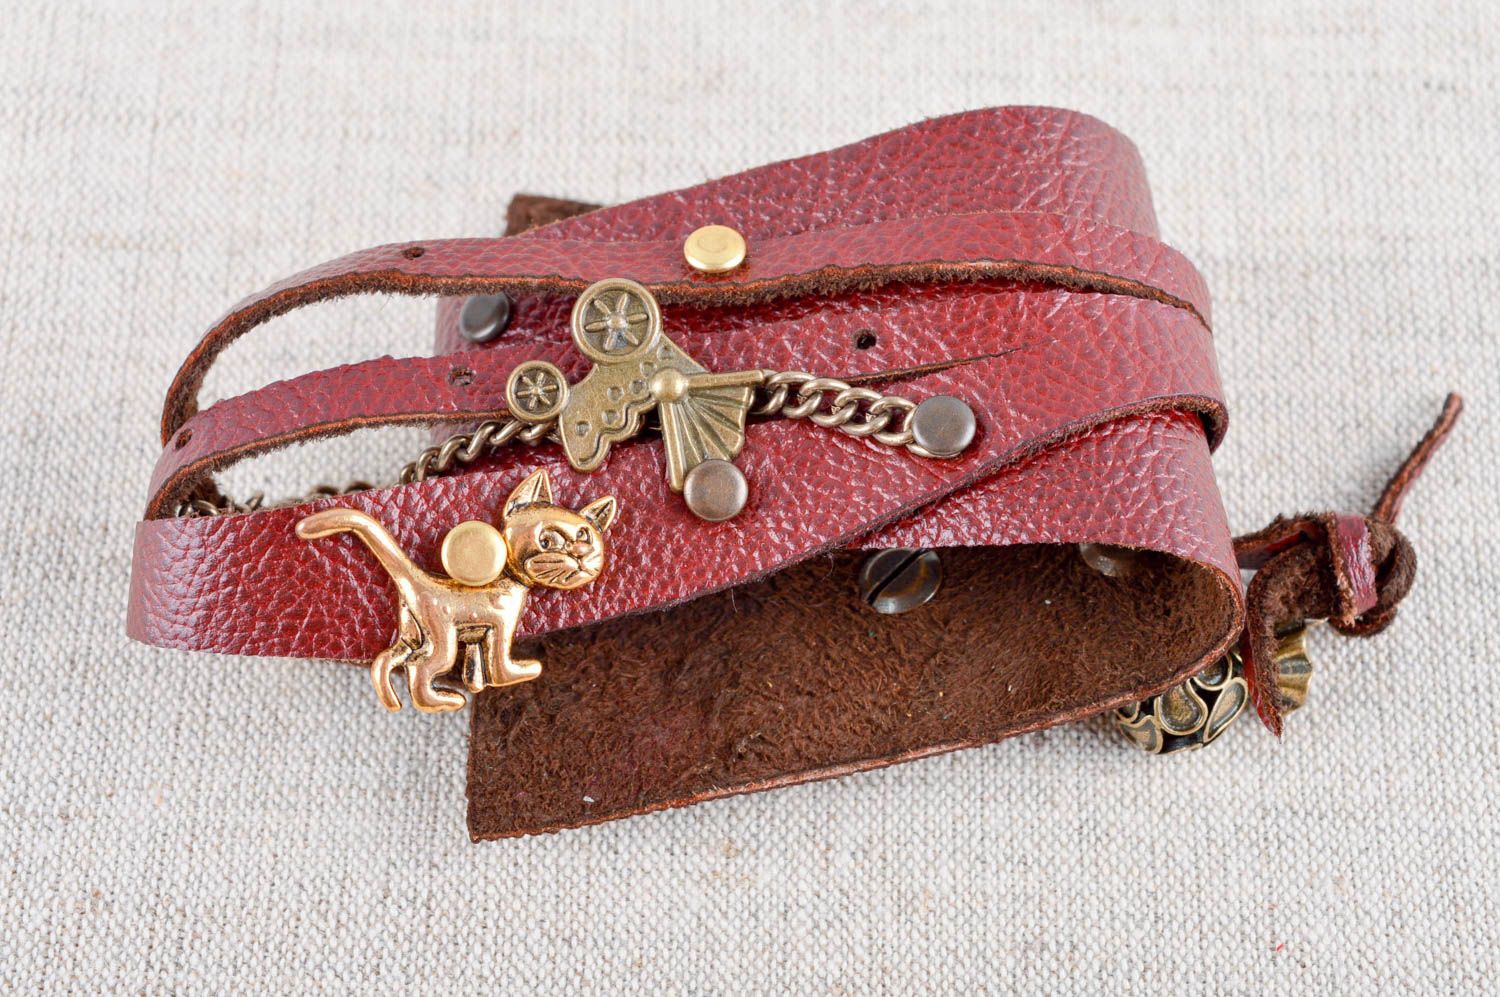 Unusual handmade leather bracelet cool jewelry wrist bracelet designs gift ideas photo 1